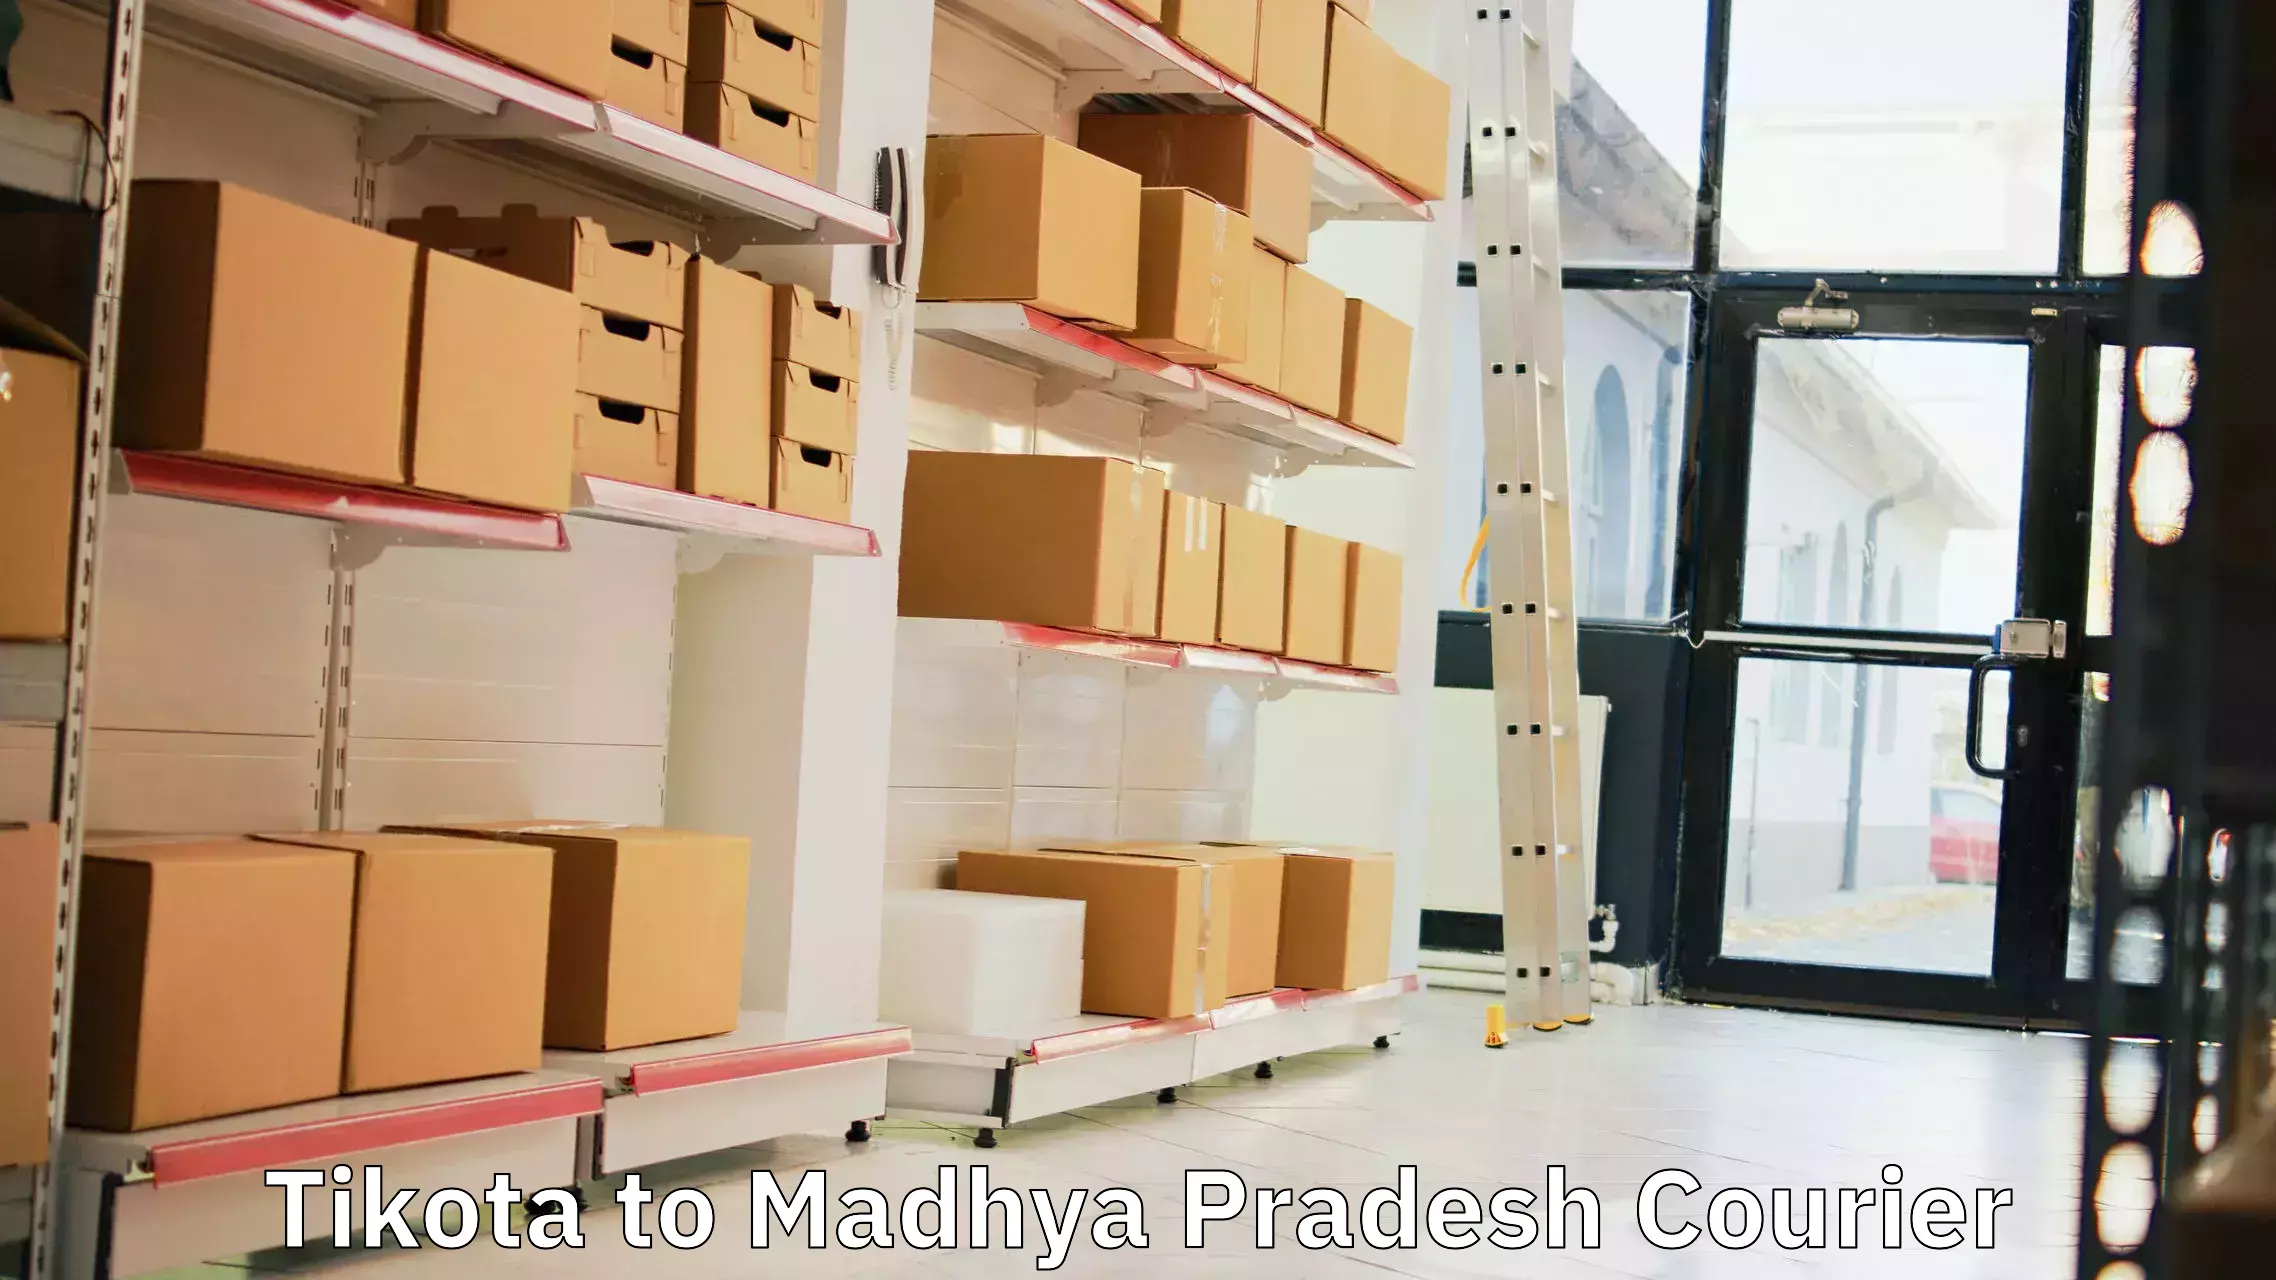 Courier service partnerships Tikota to Mandla